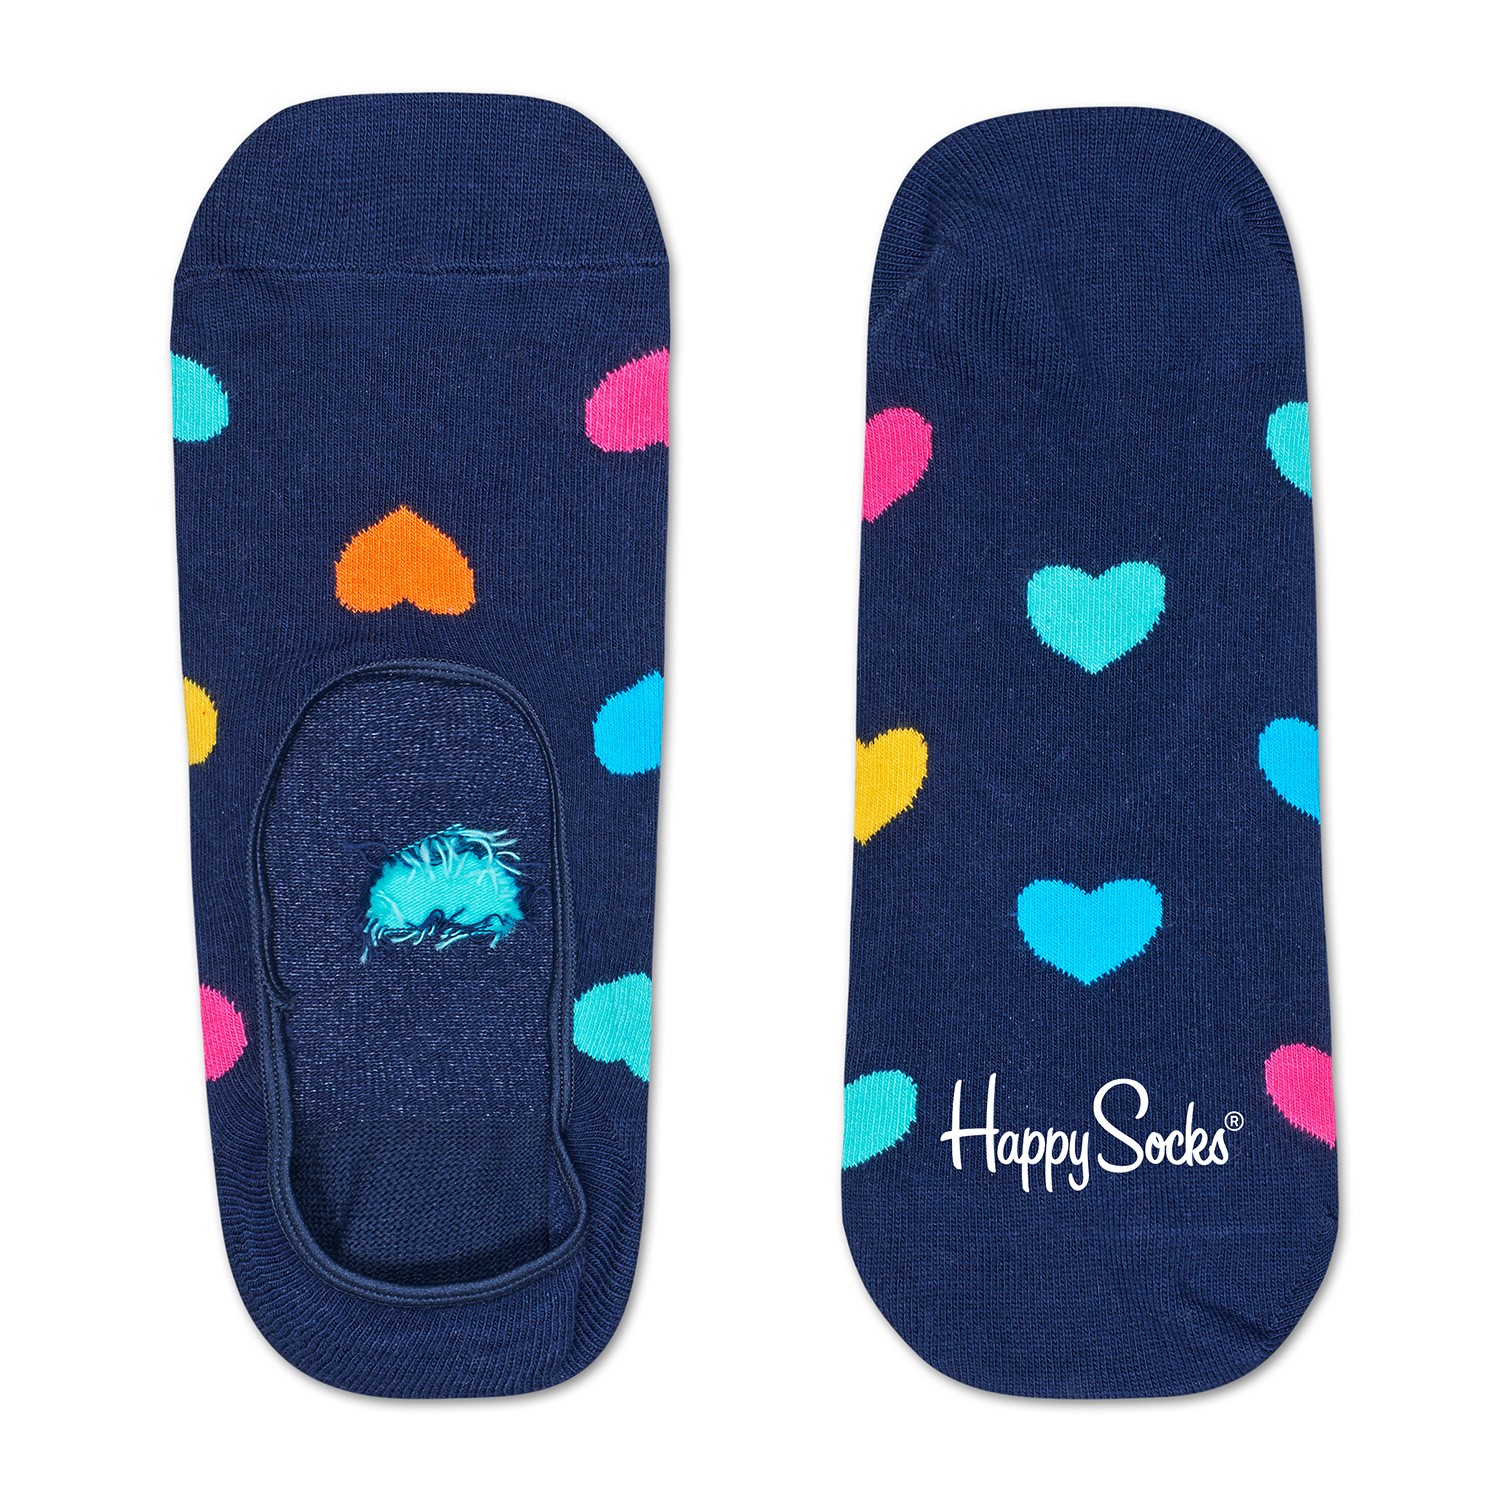 Happy Socks Heart Liner Sock